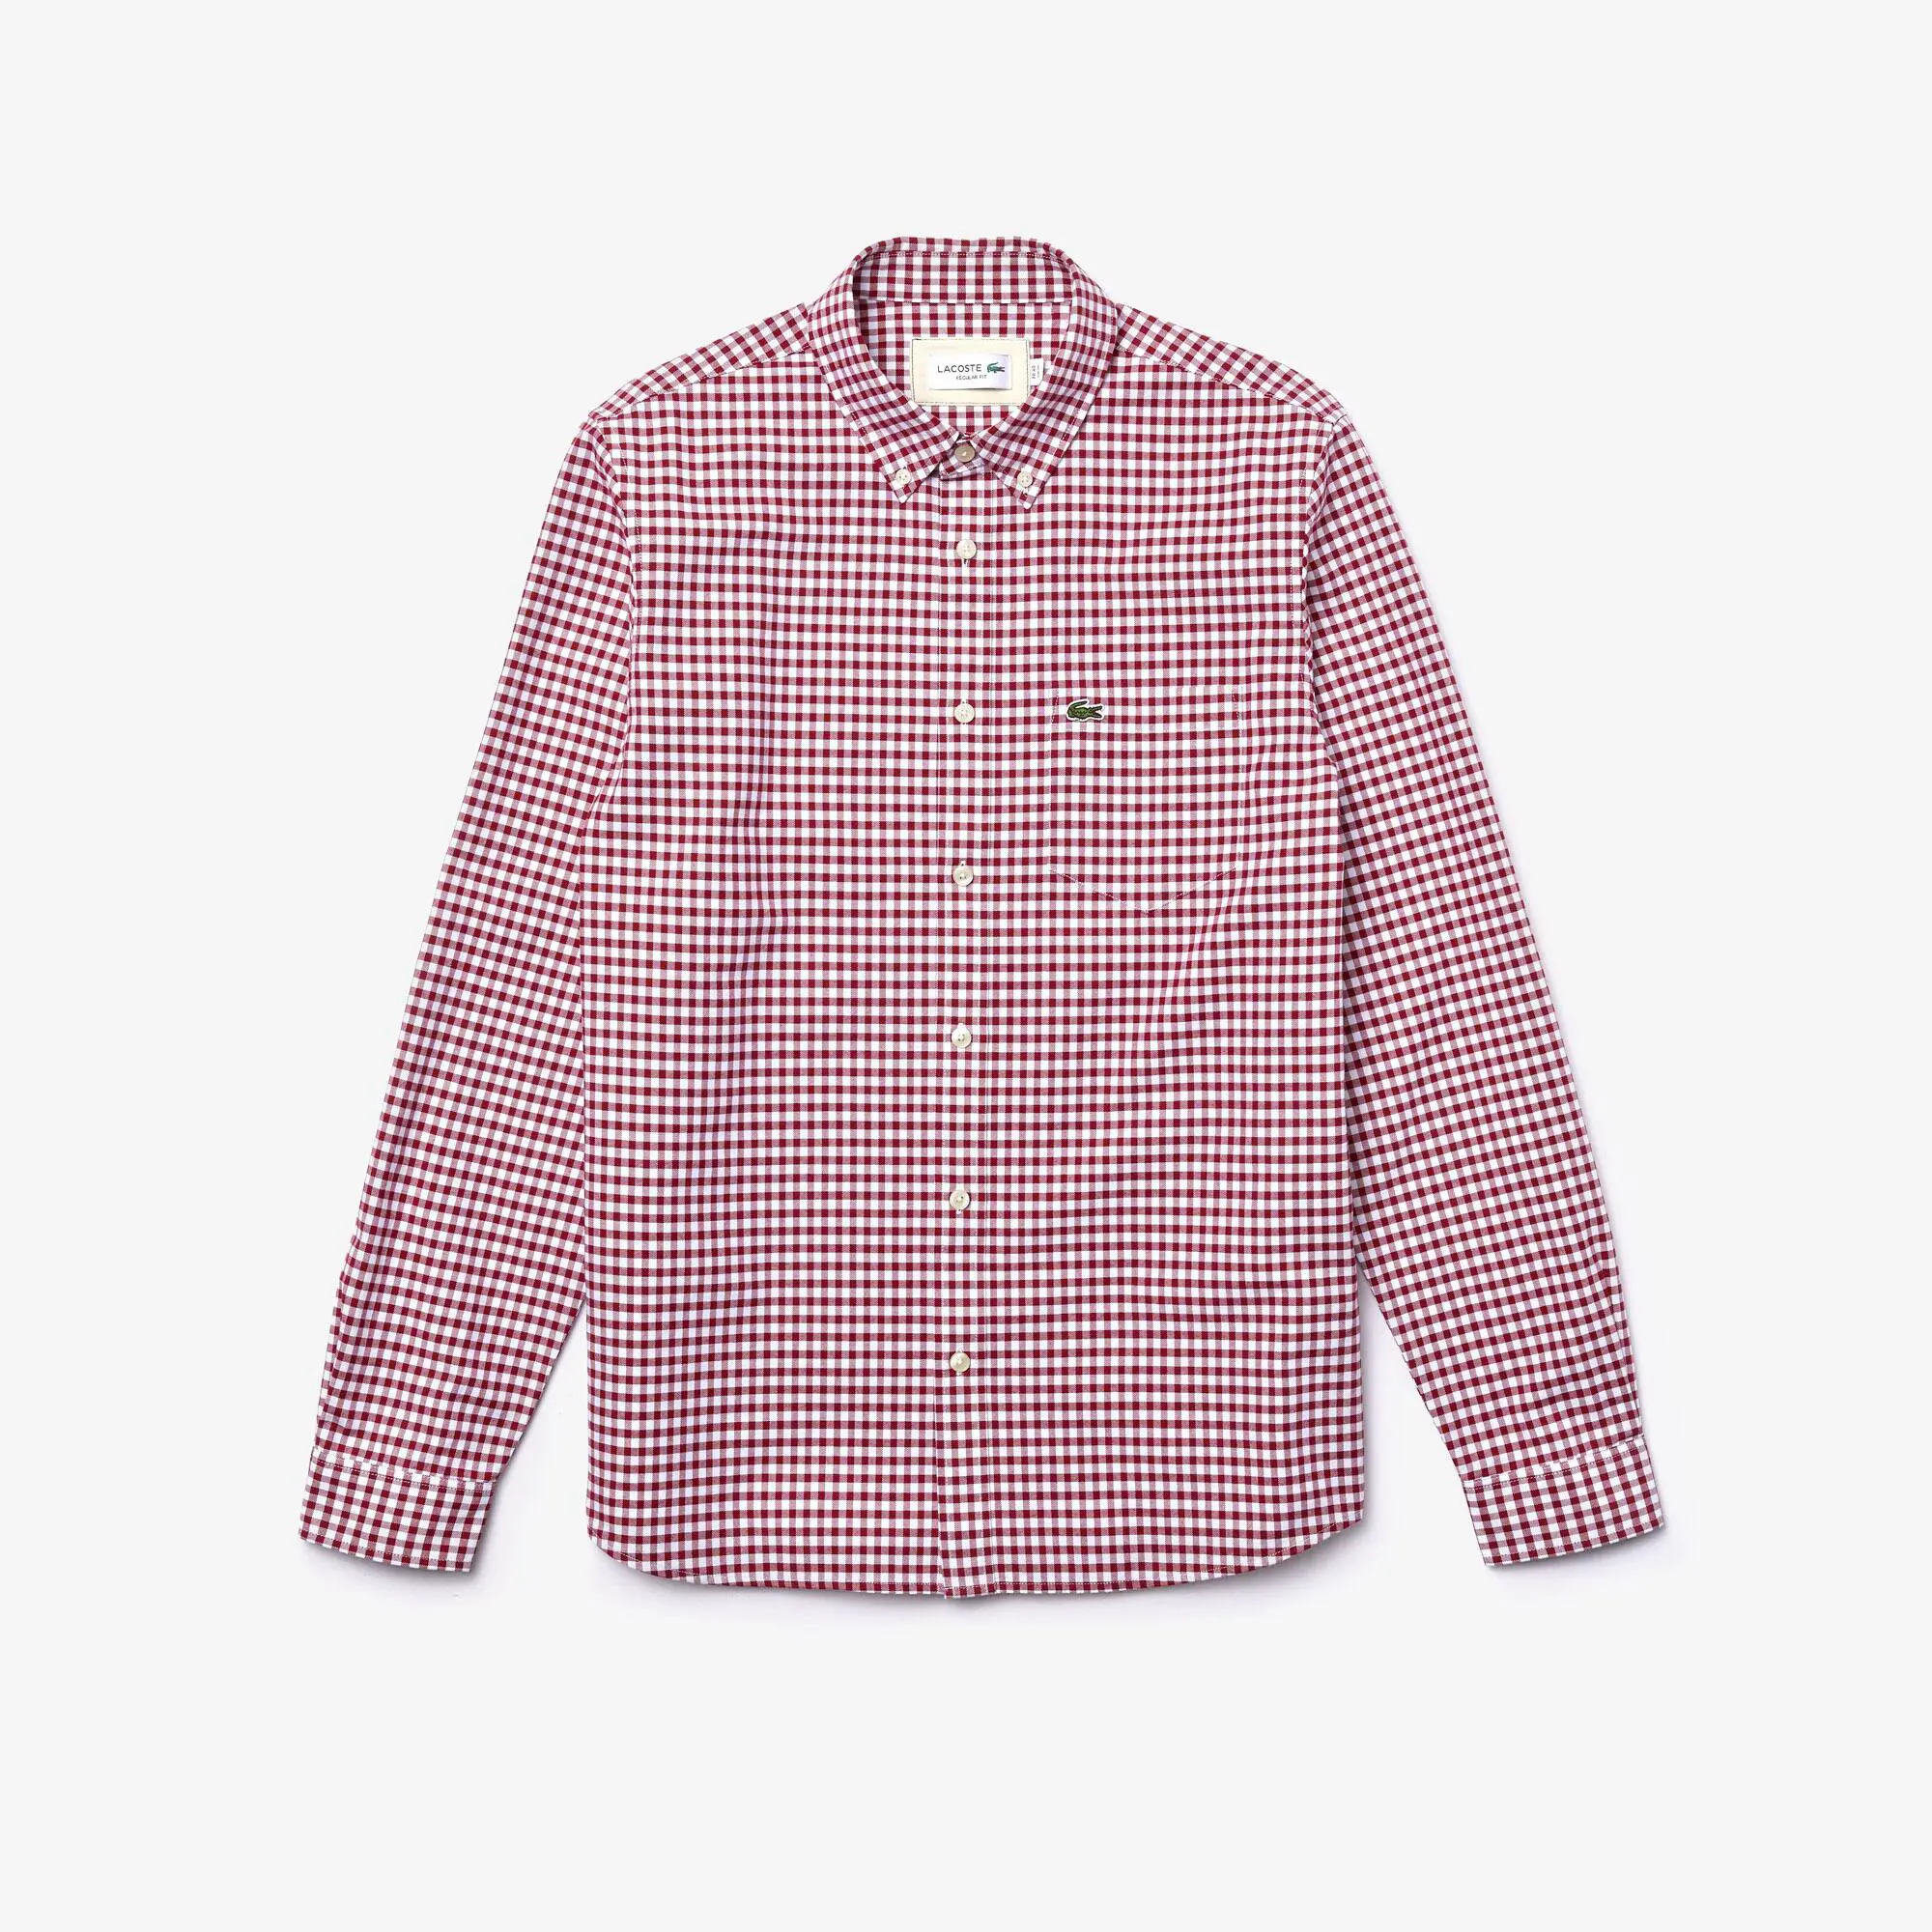 Lacoste Men's Regular Fit Gingham Oxford Cotton Shirt. 2